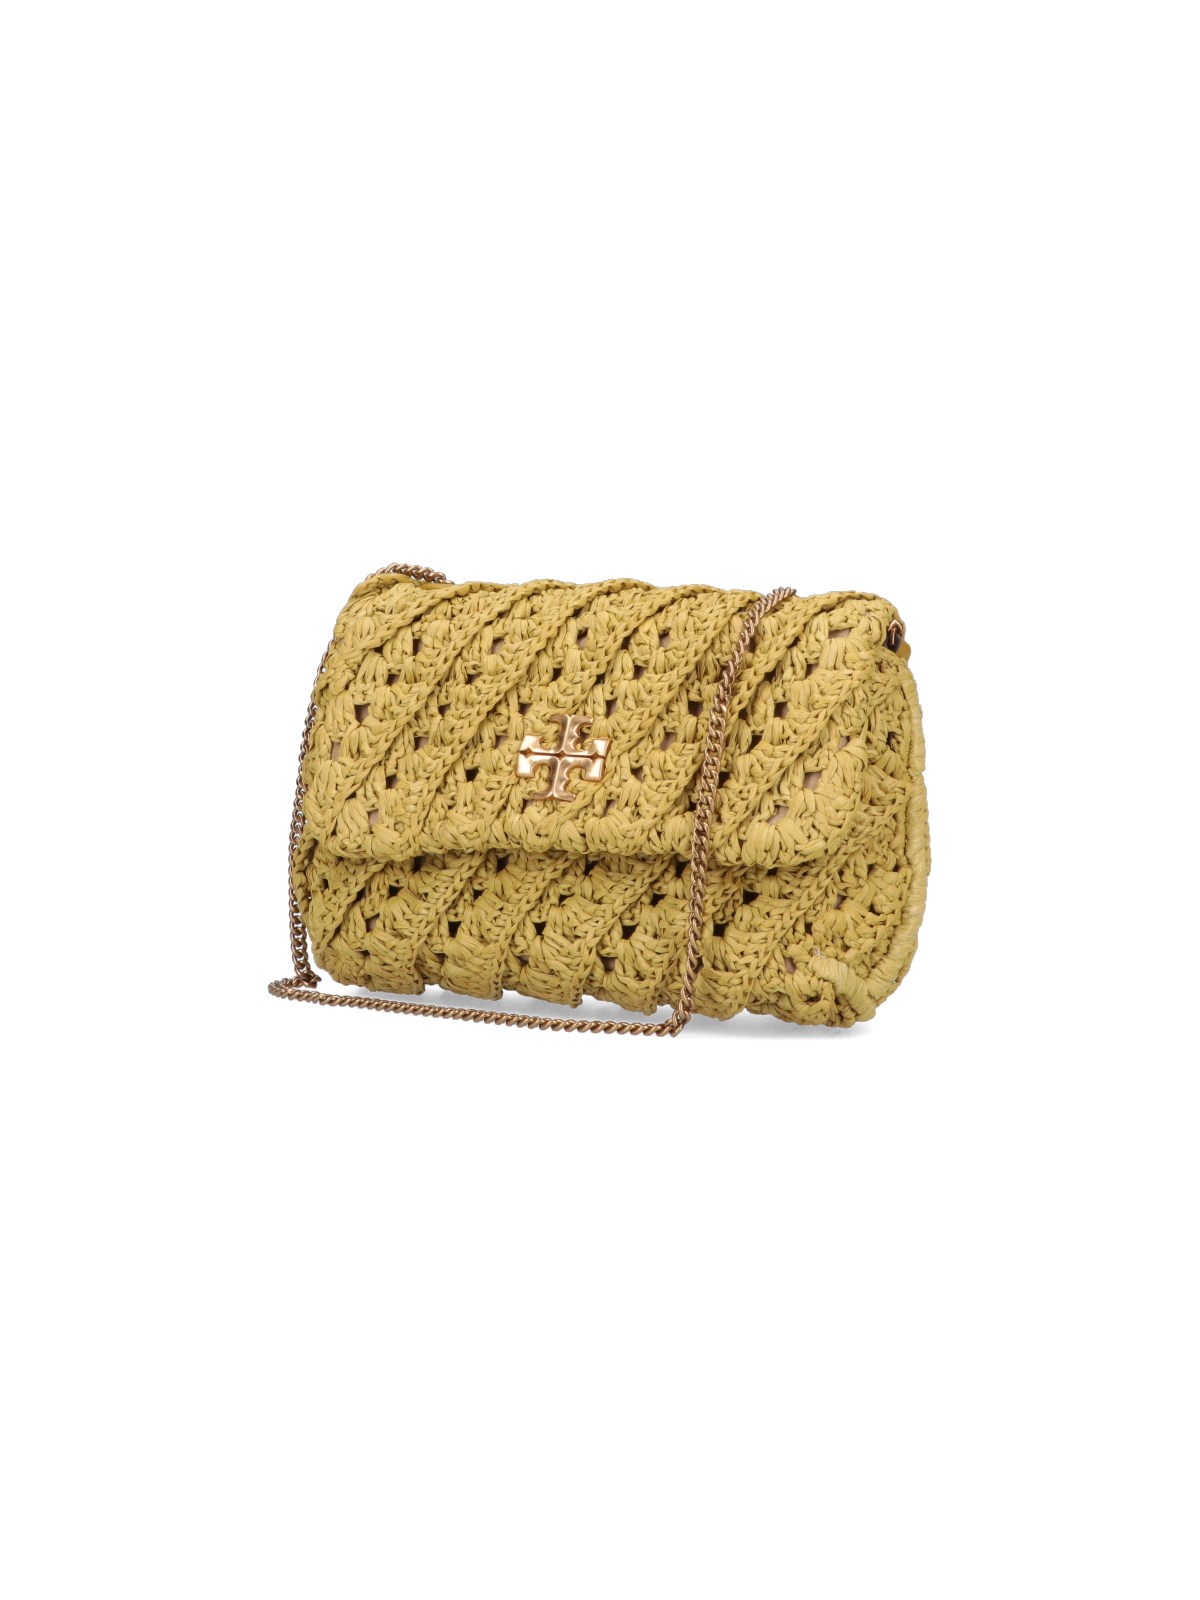 Tory burch 'kira' crochet mini bag available on SUGAR - 55779